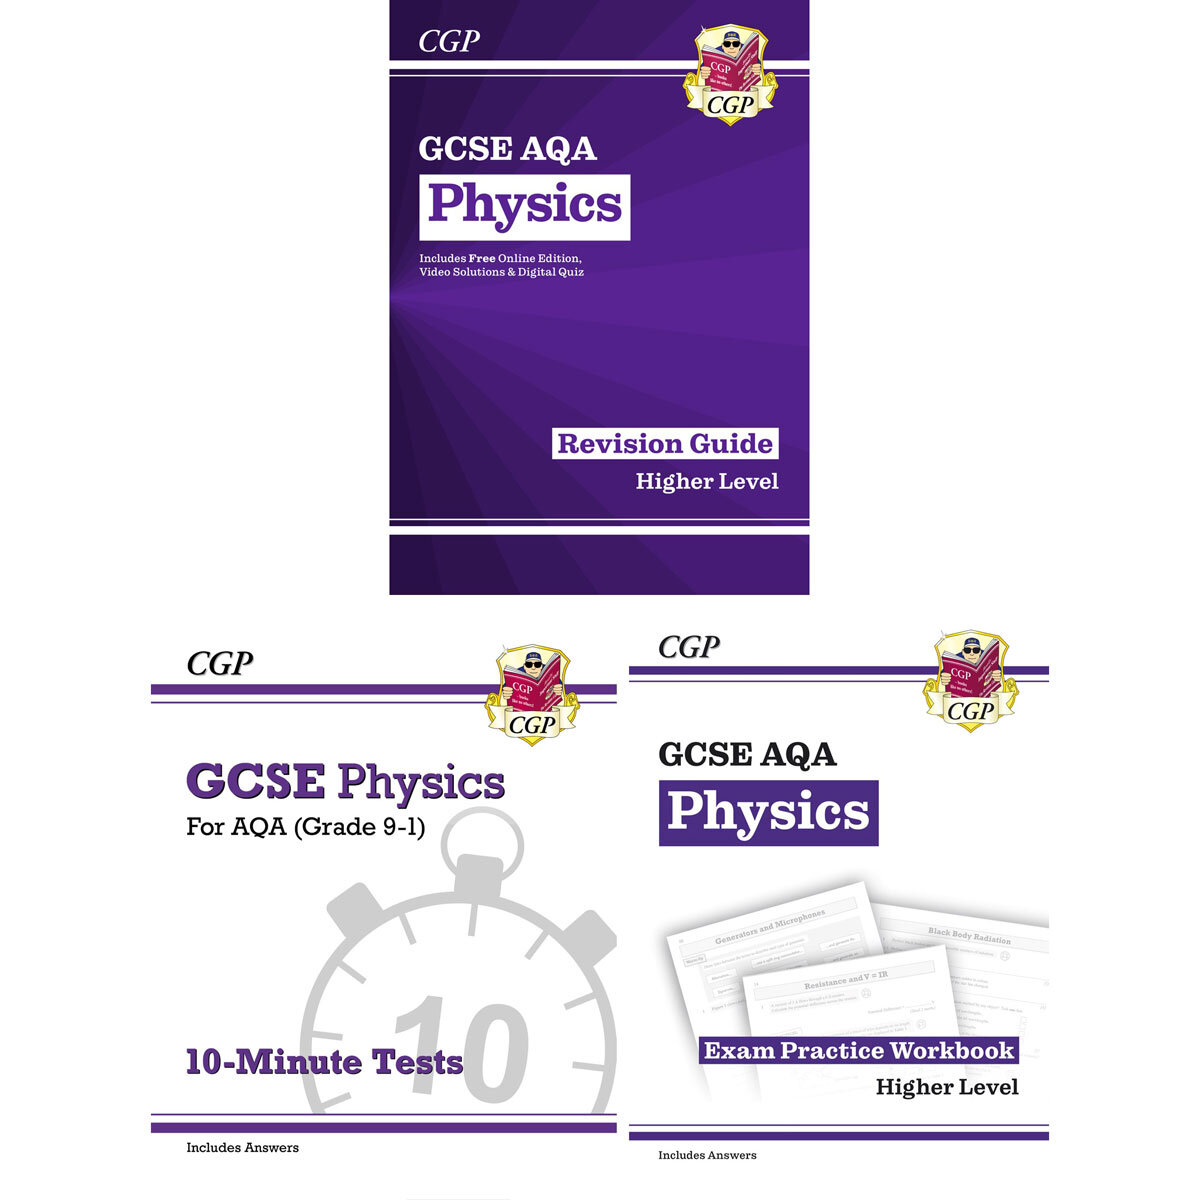 Title Page of CGP GCSE AQA Physics text book